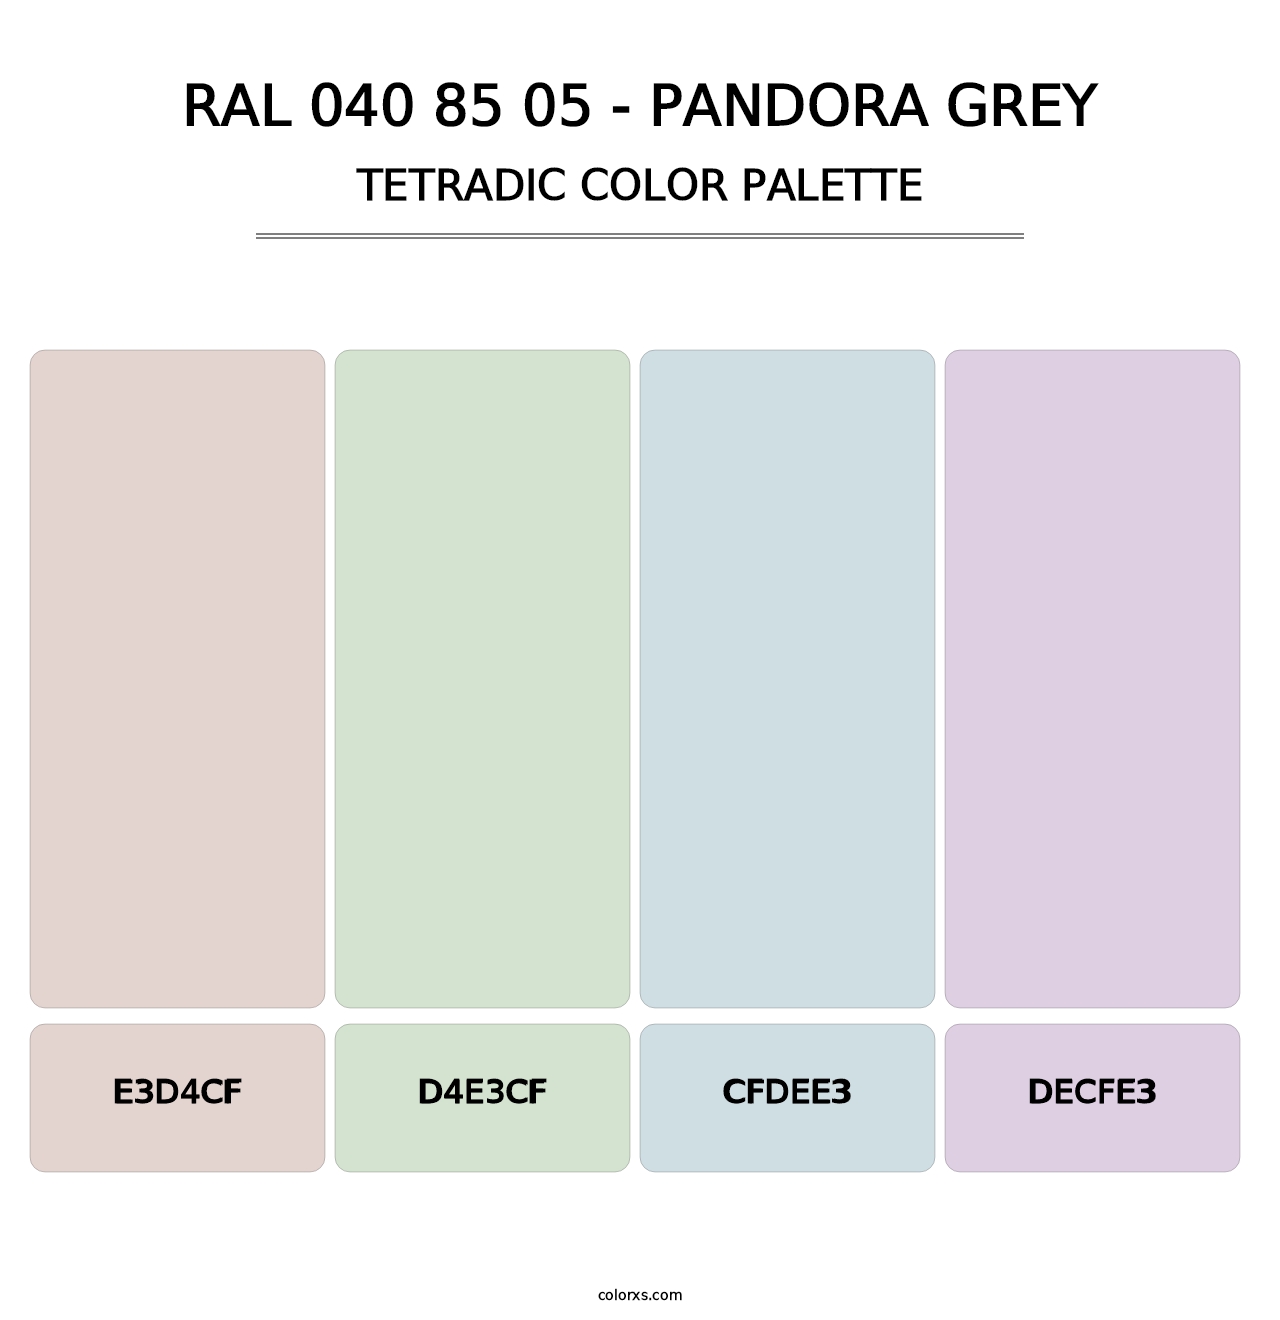 RAL 040 85 05 - Pandora Grey - Tetradic Color Palette